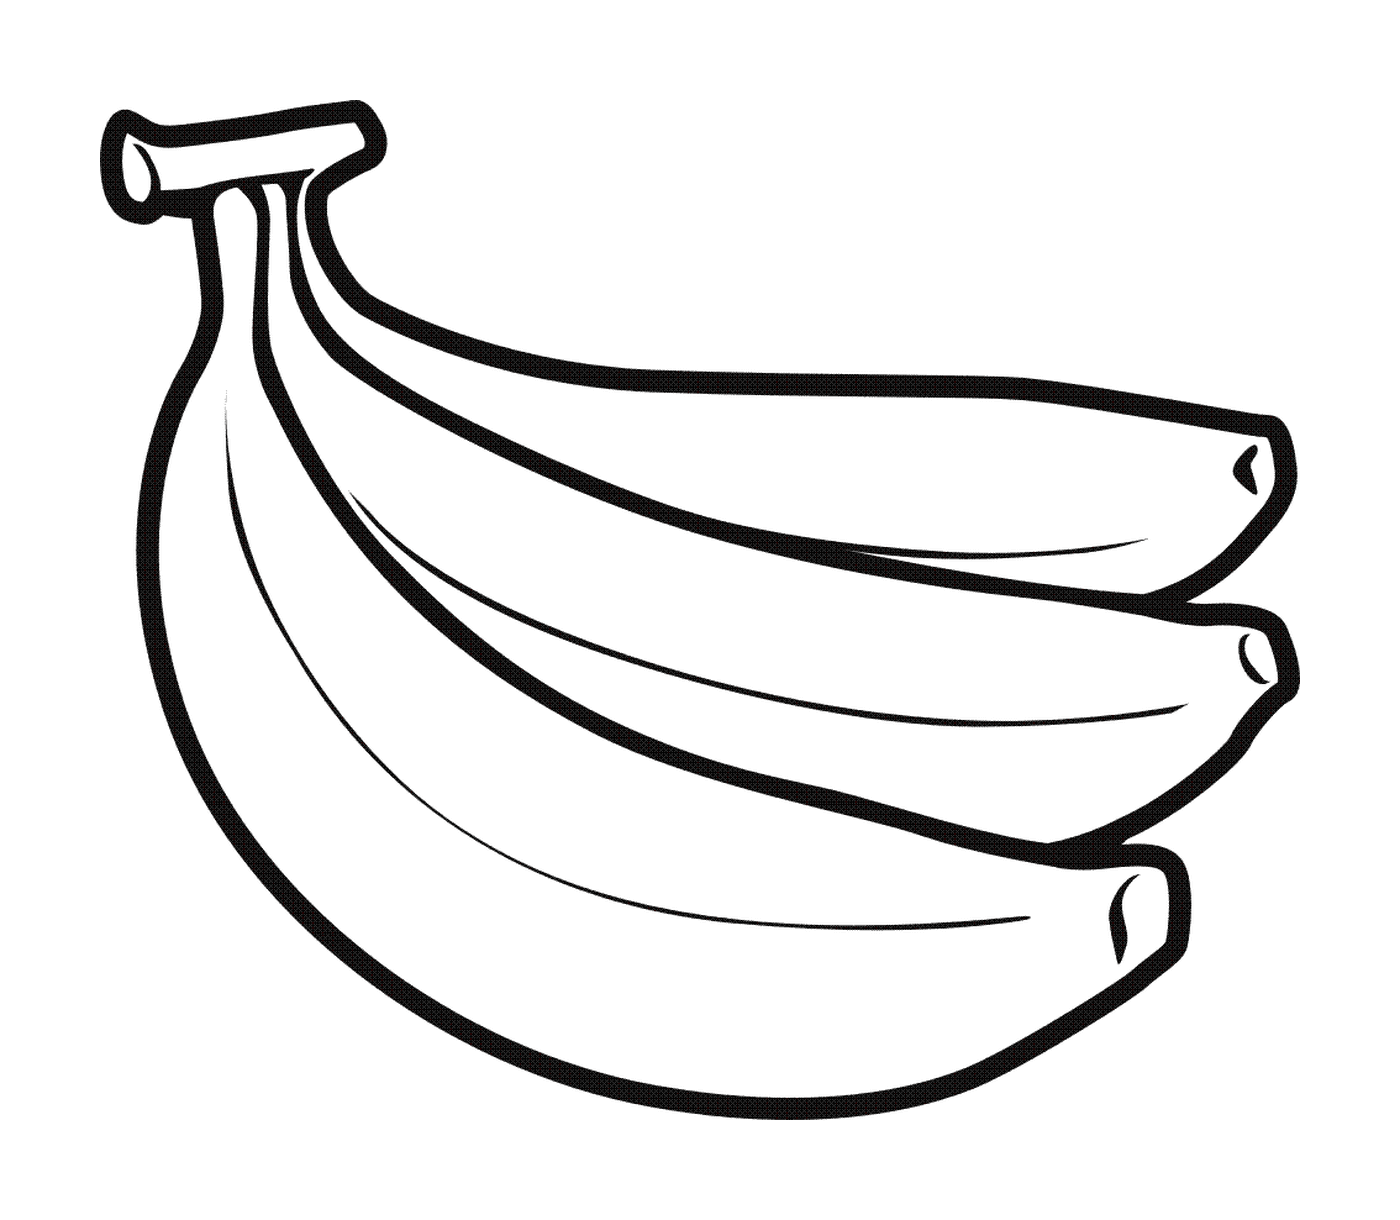  Reife Bananen auf dem Boden 